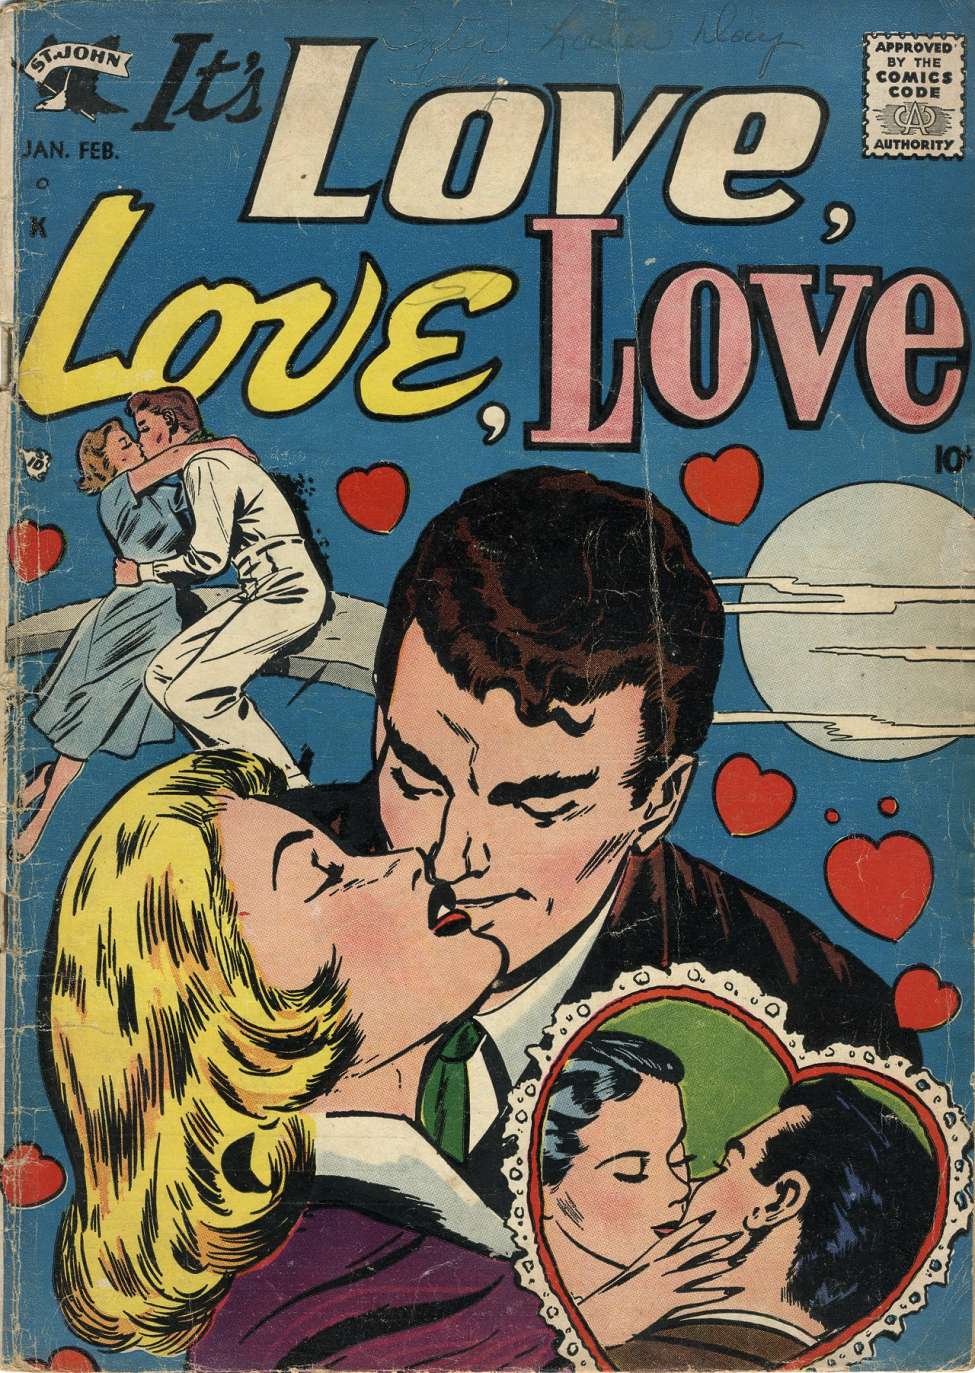 Comic Book Cover For It's Love, Love, Love 2